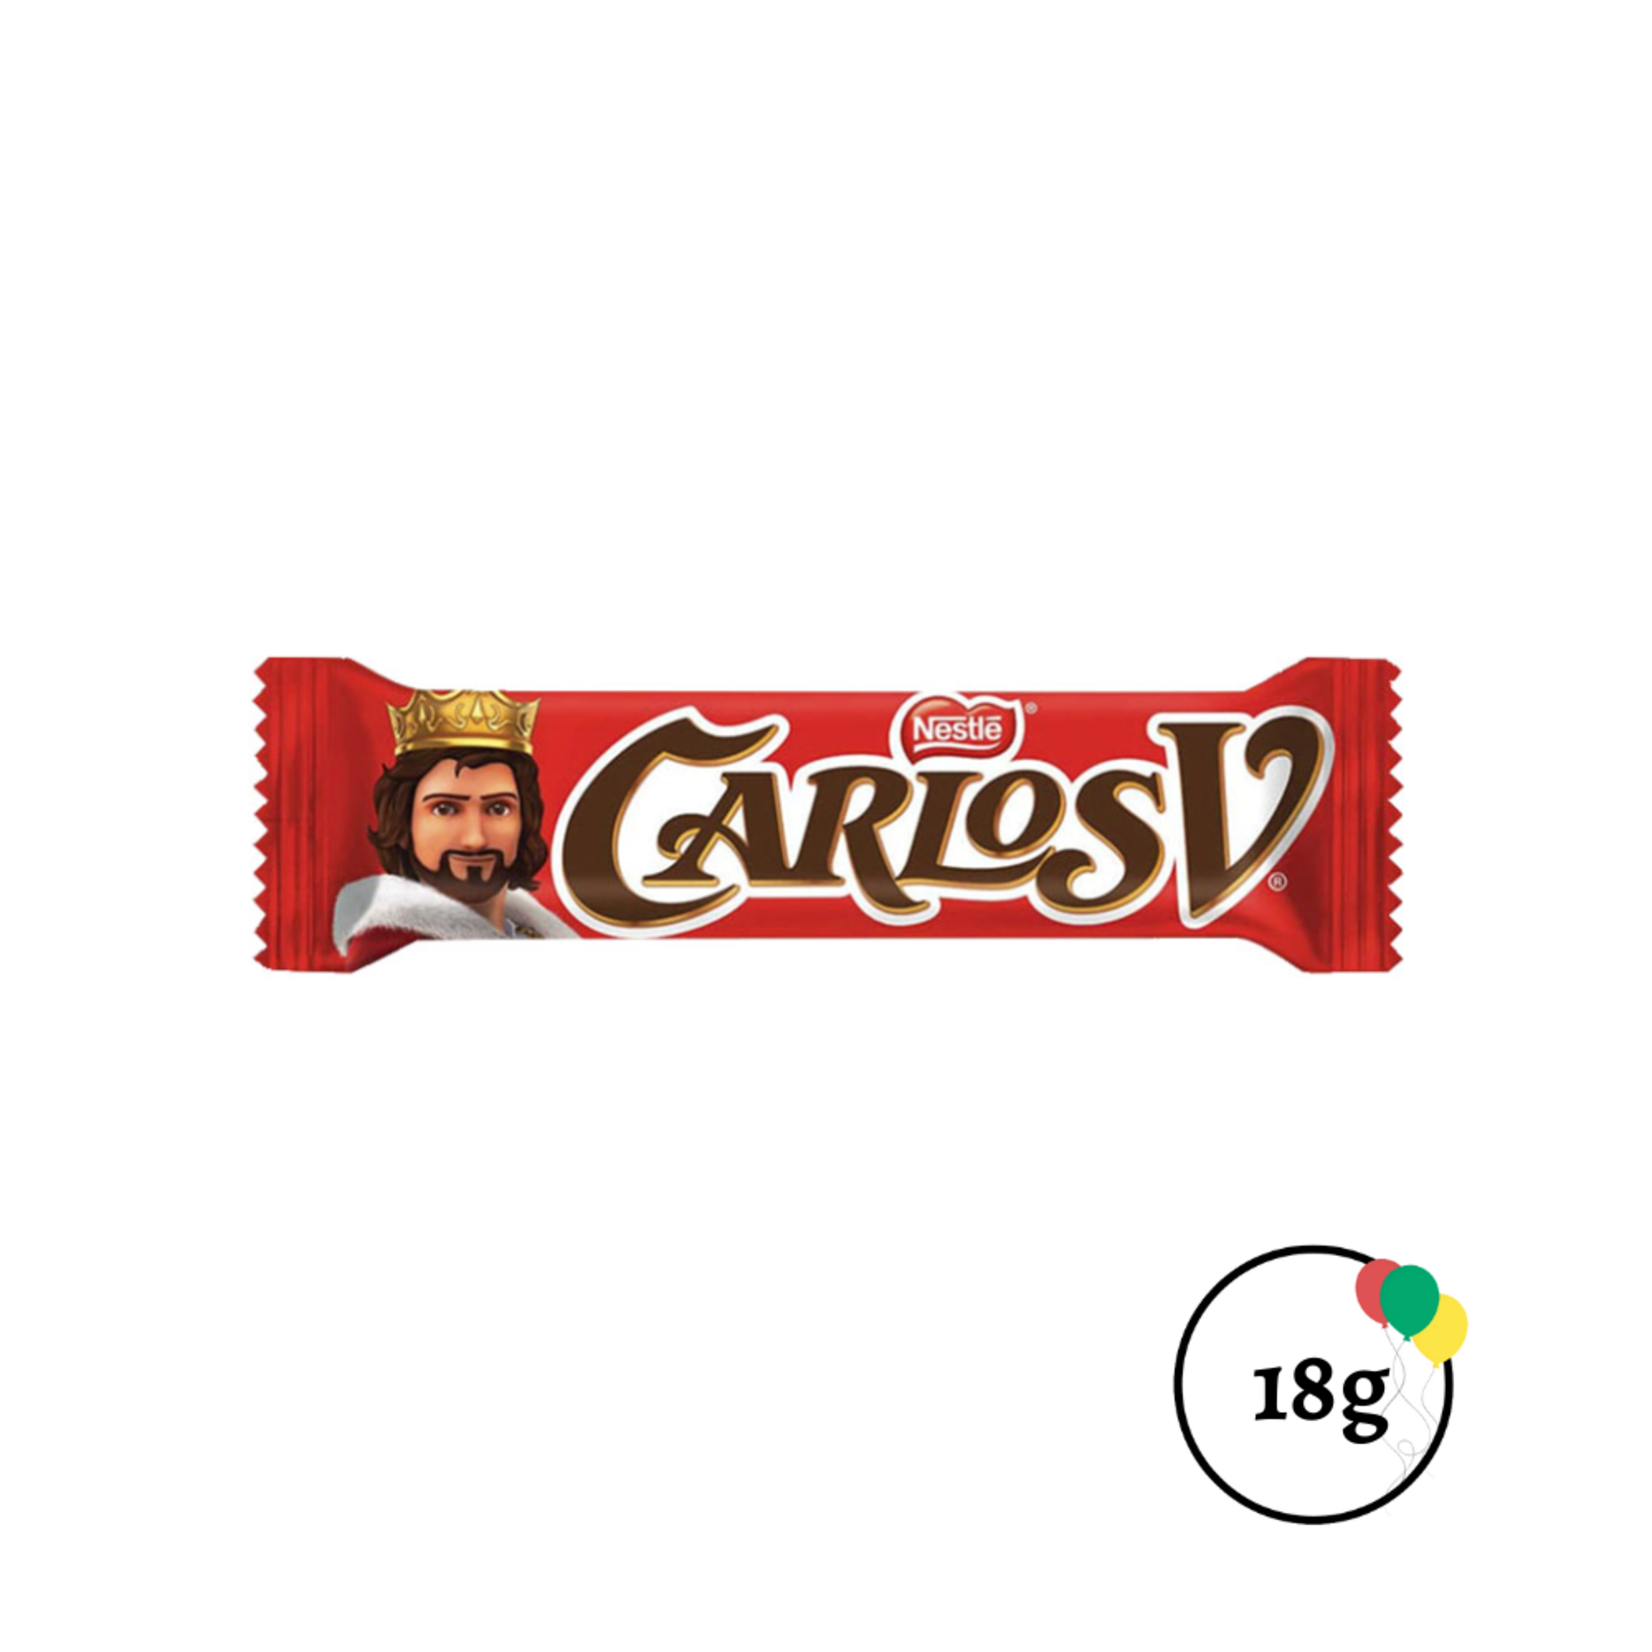 Nestle Carlos V 96ct